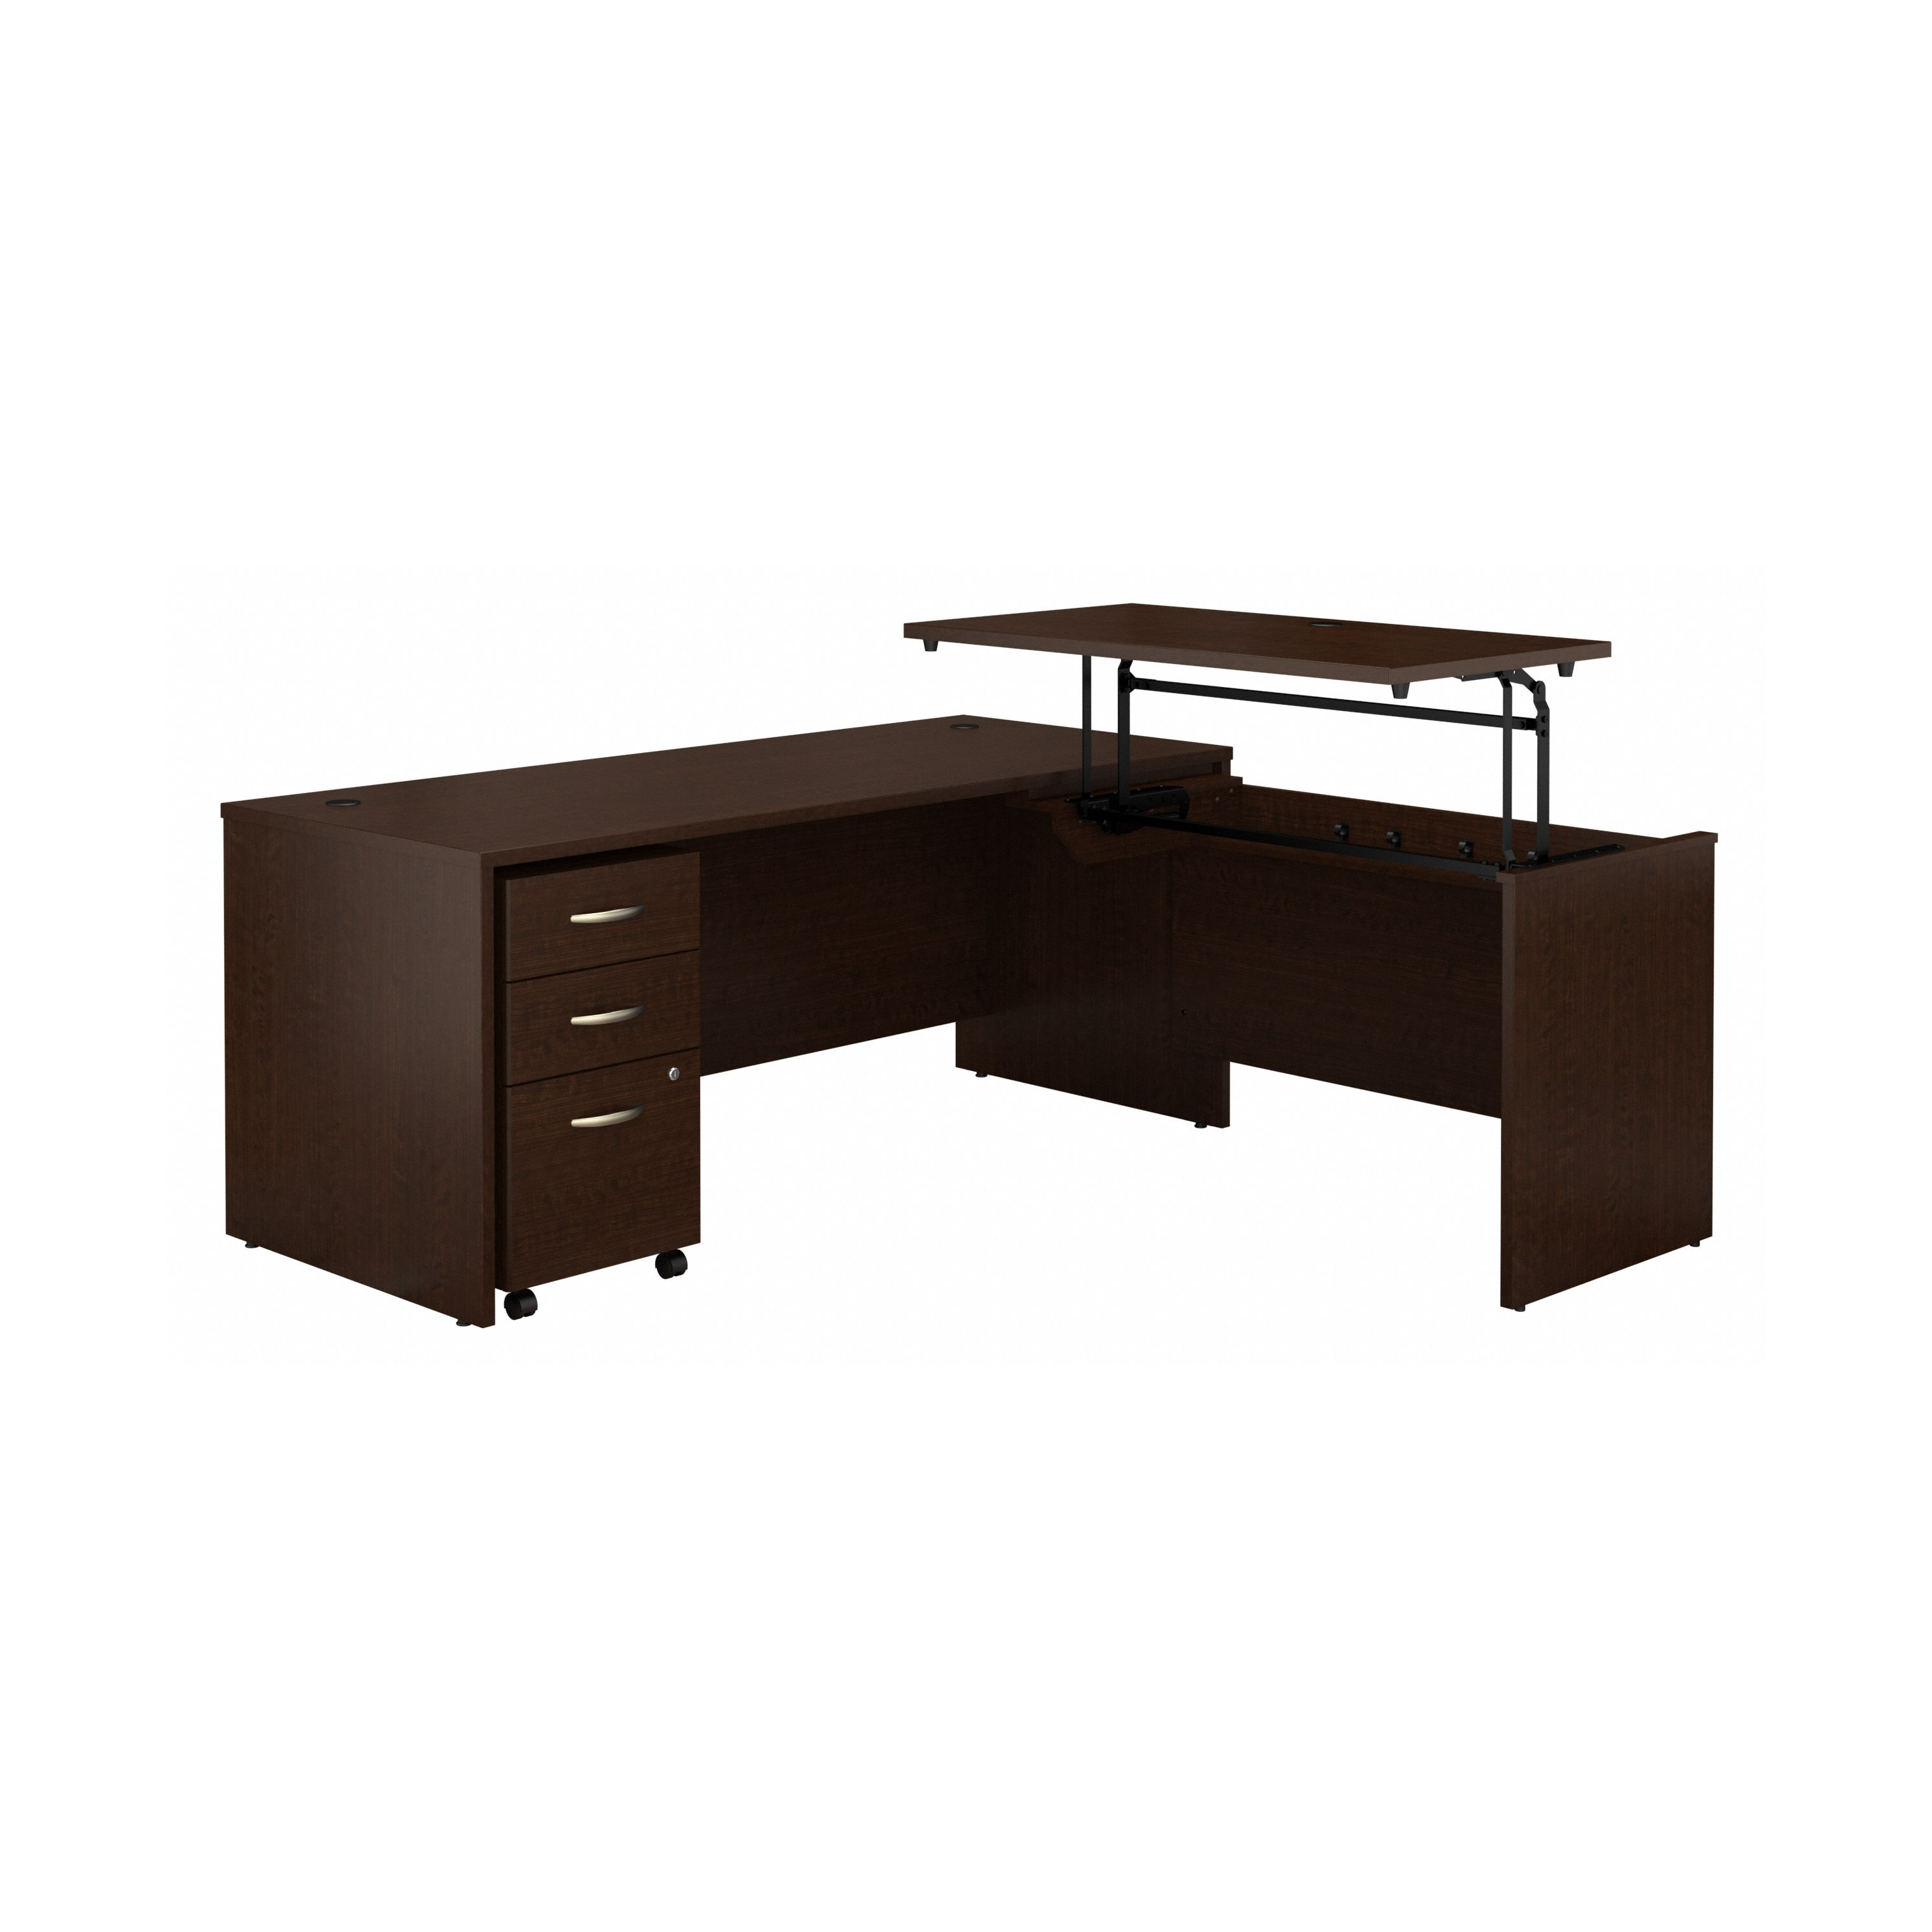 Shop Bush Business Furniture Series C 72W x 30D 3 Position Sit to Stand L Shaped Desk with Mobile File Cabinet 02 SRC125MRSU #color_mocha cherry